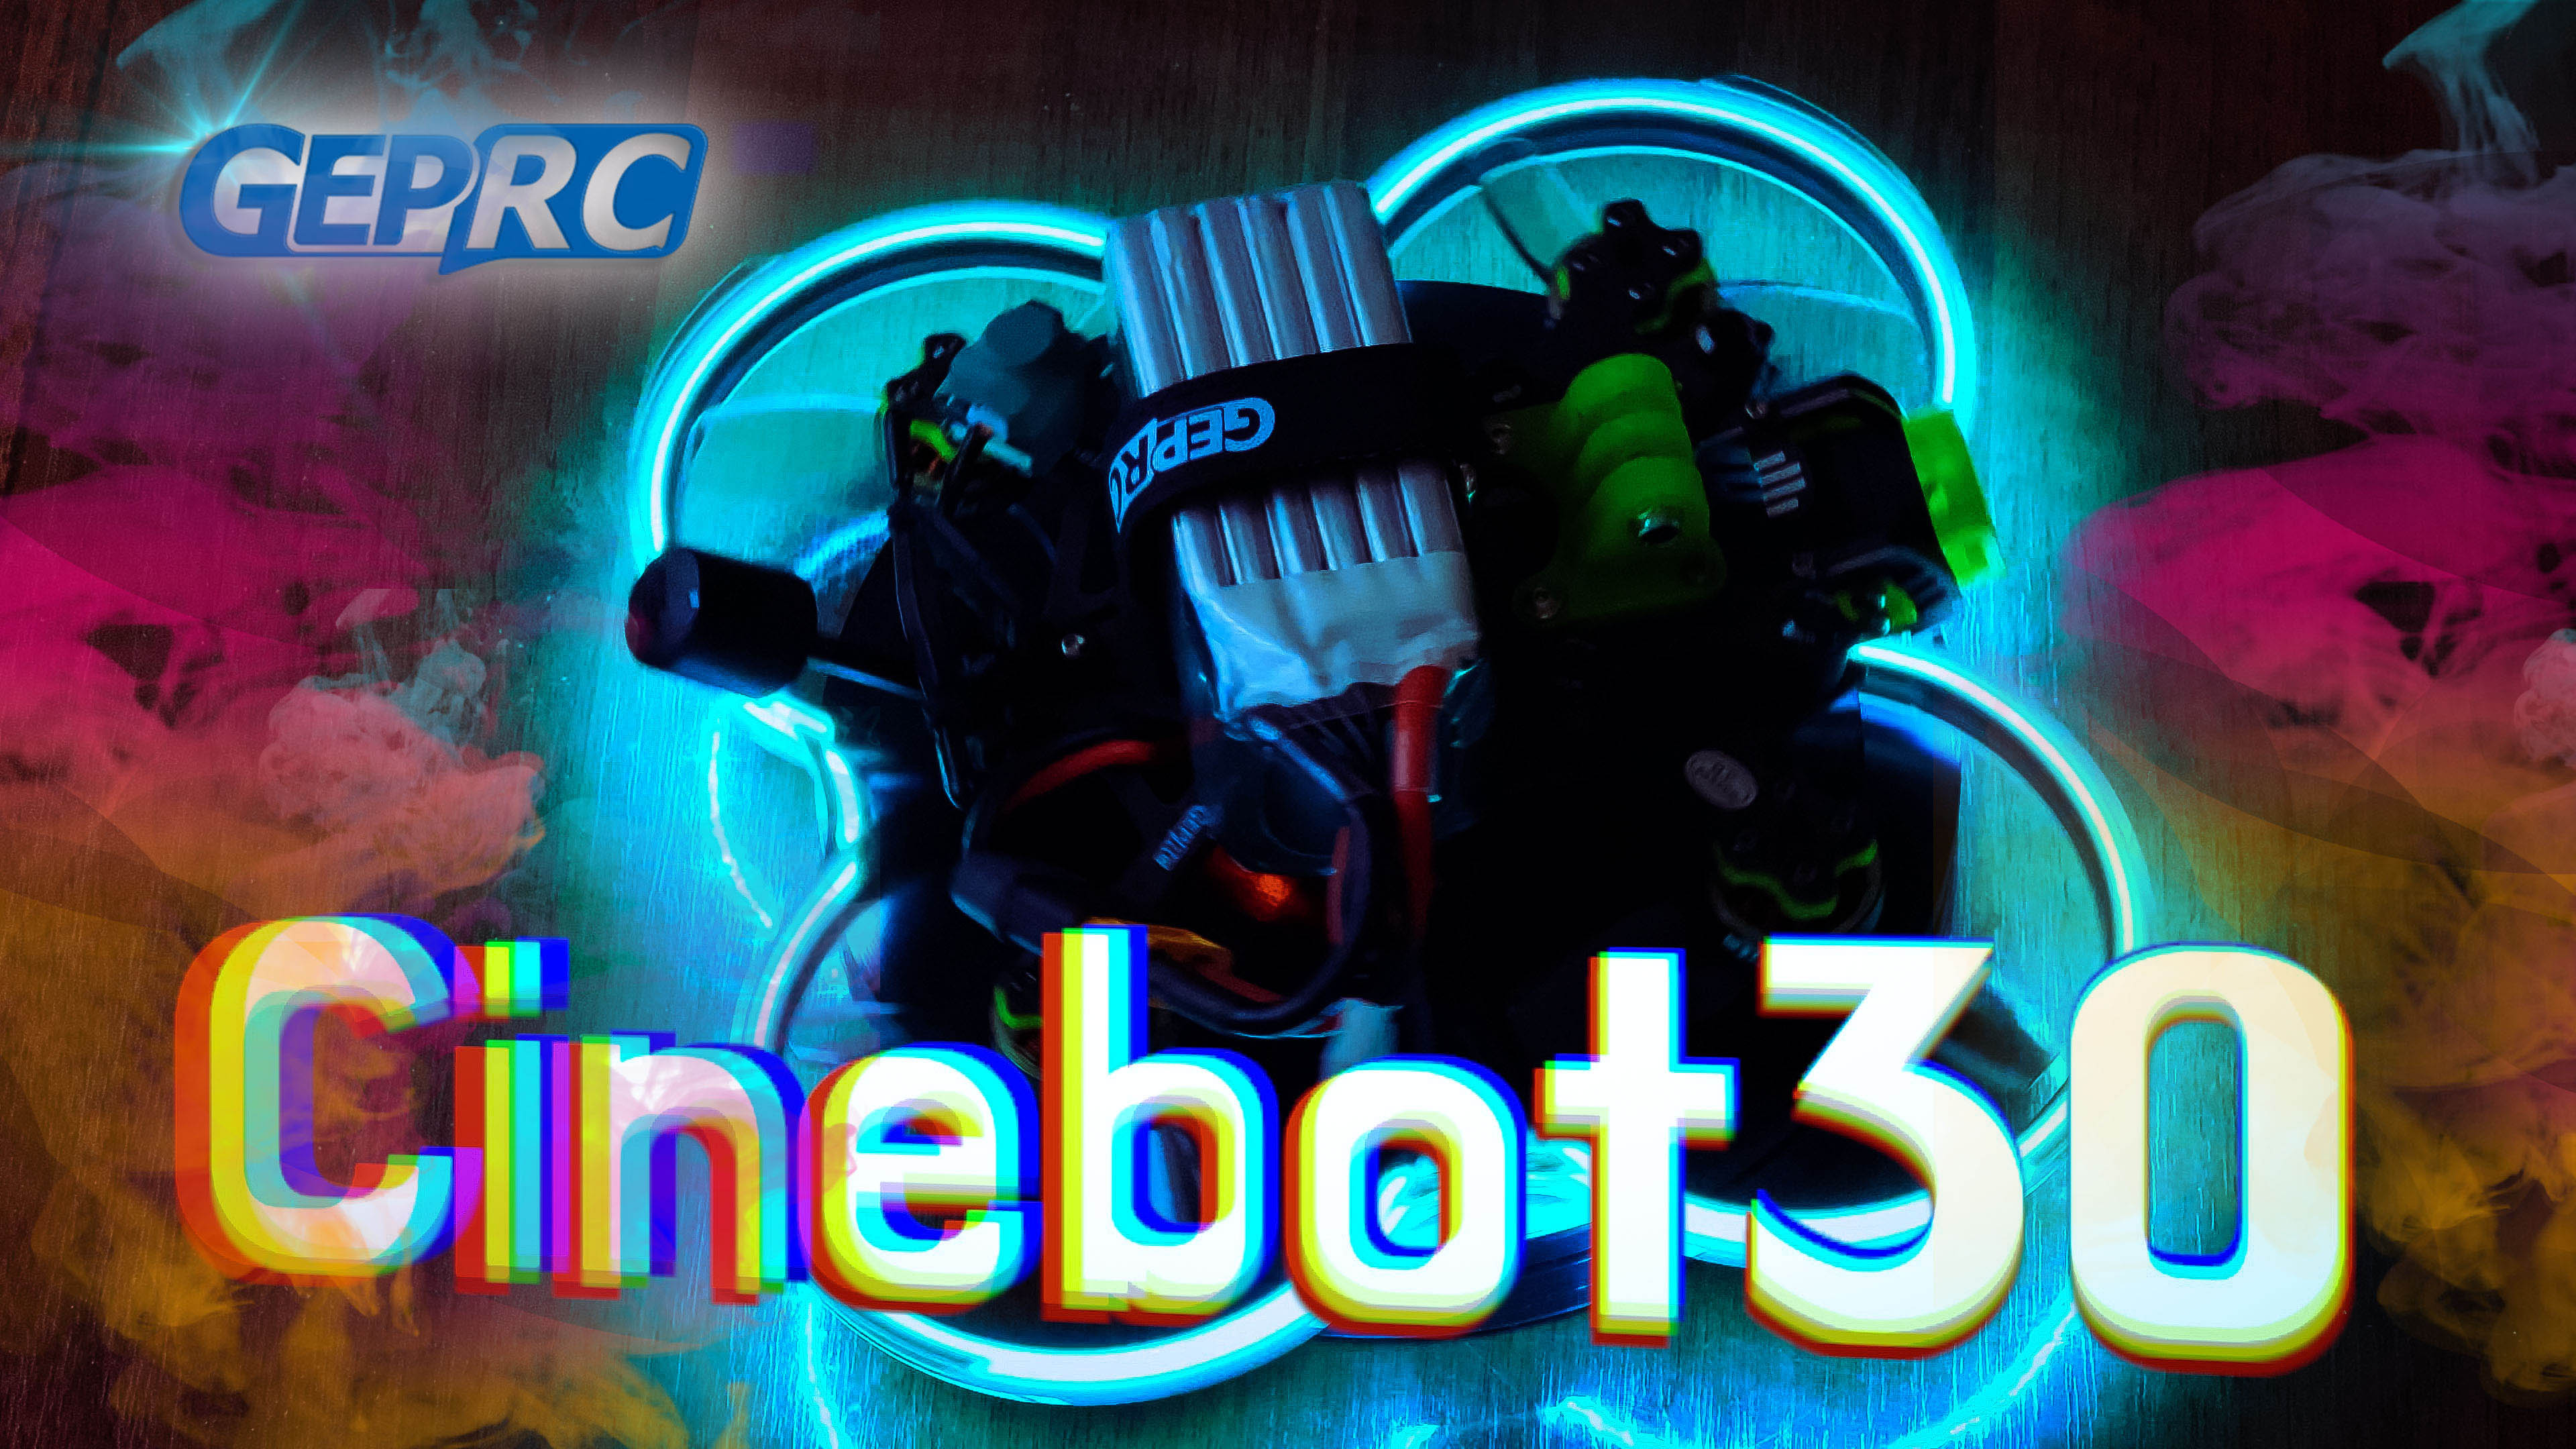 GEPRC cinebot25. Cinebot 25. Cinebot 30 купить. Cinebot 30